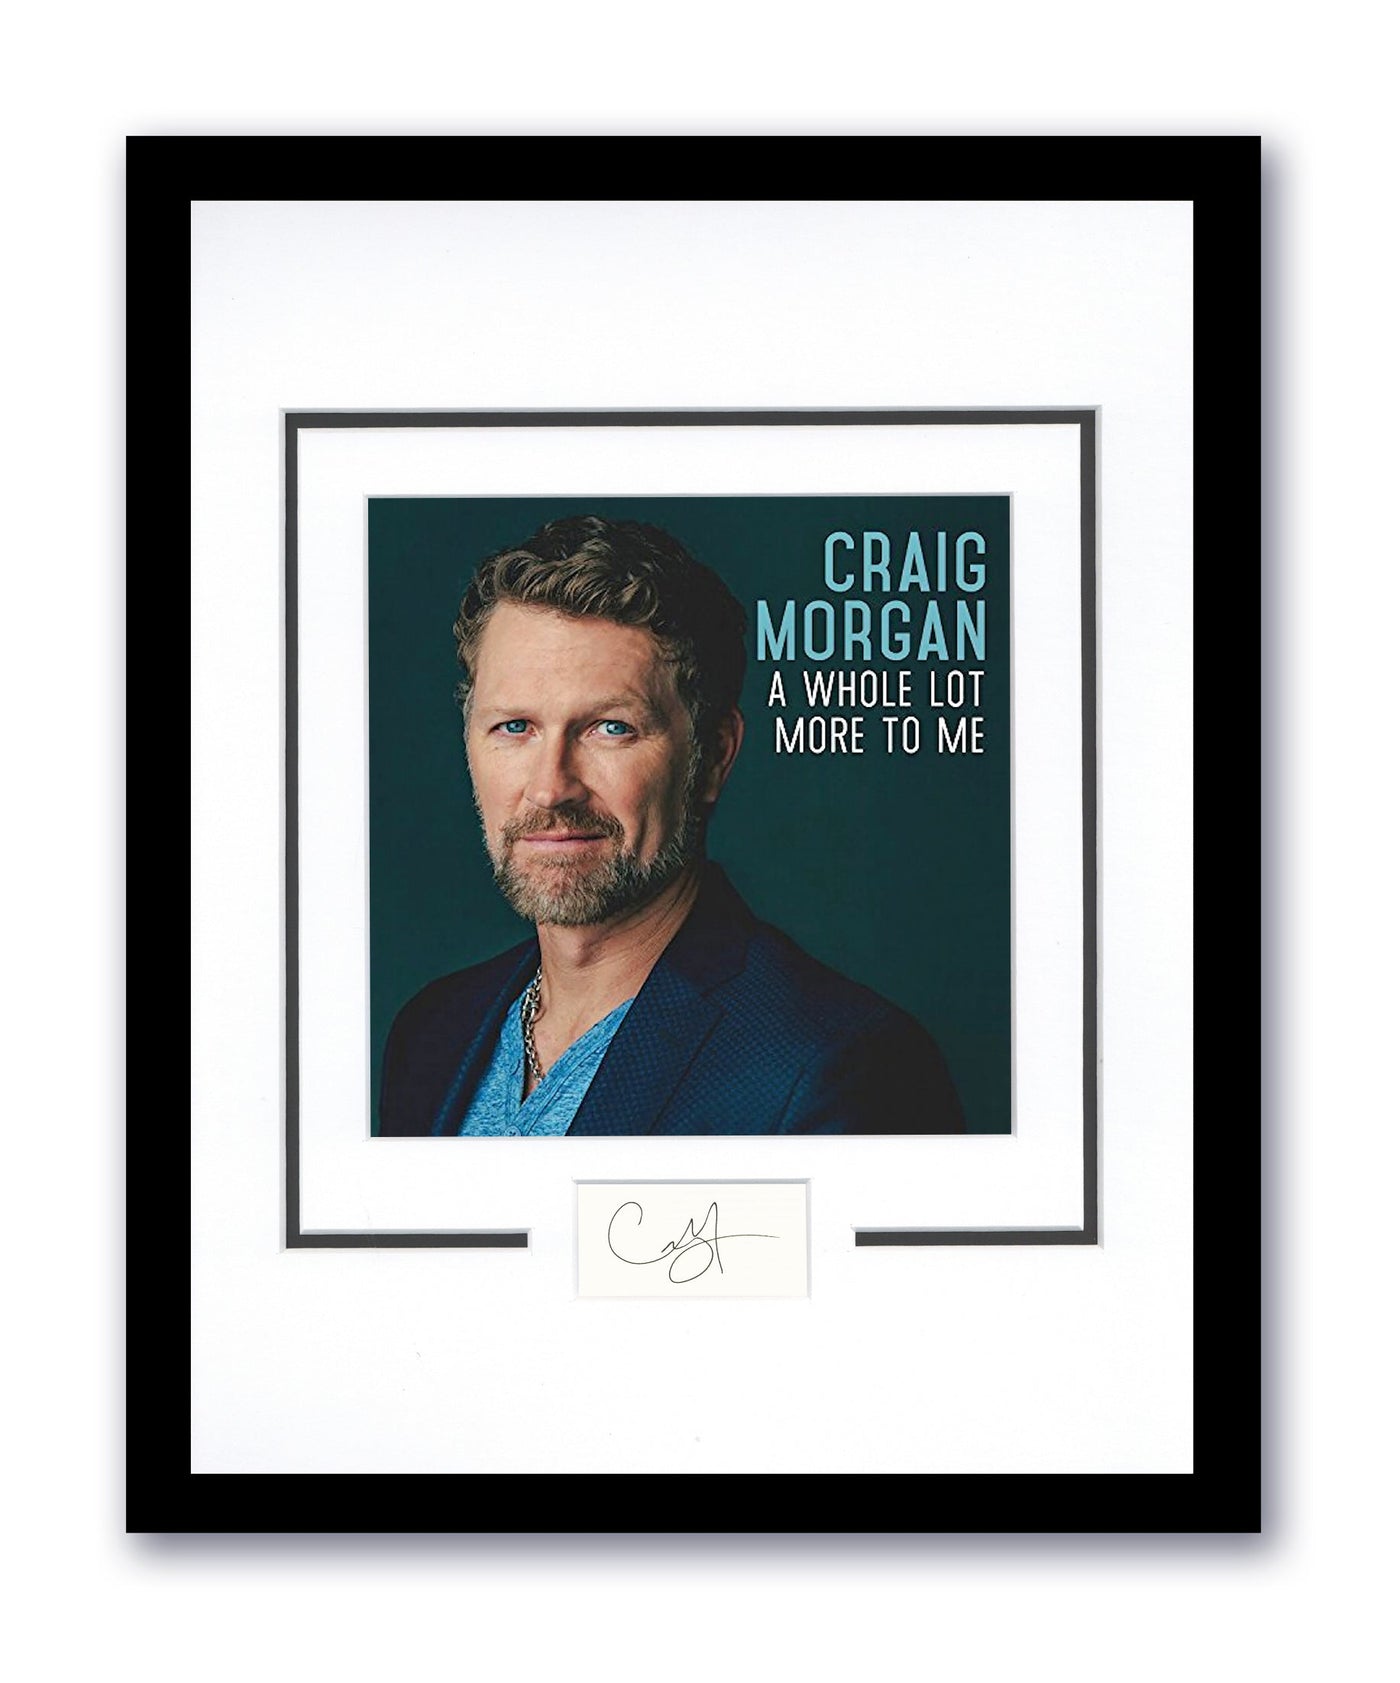 Craig Morgan Autographed Signed 11x14 Framed Photo Little Bit Of Life ACOA